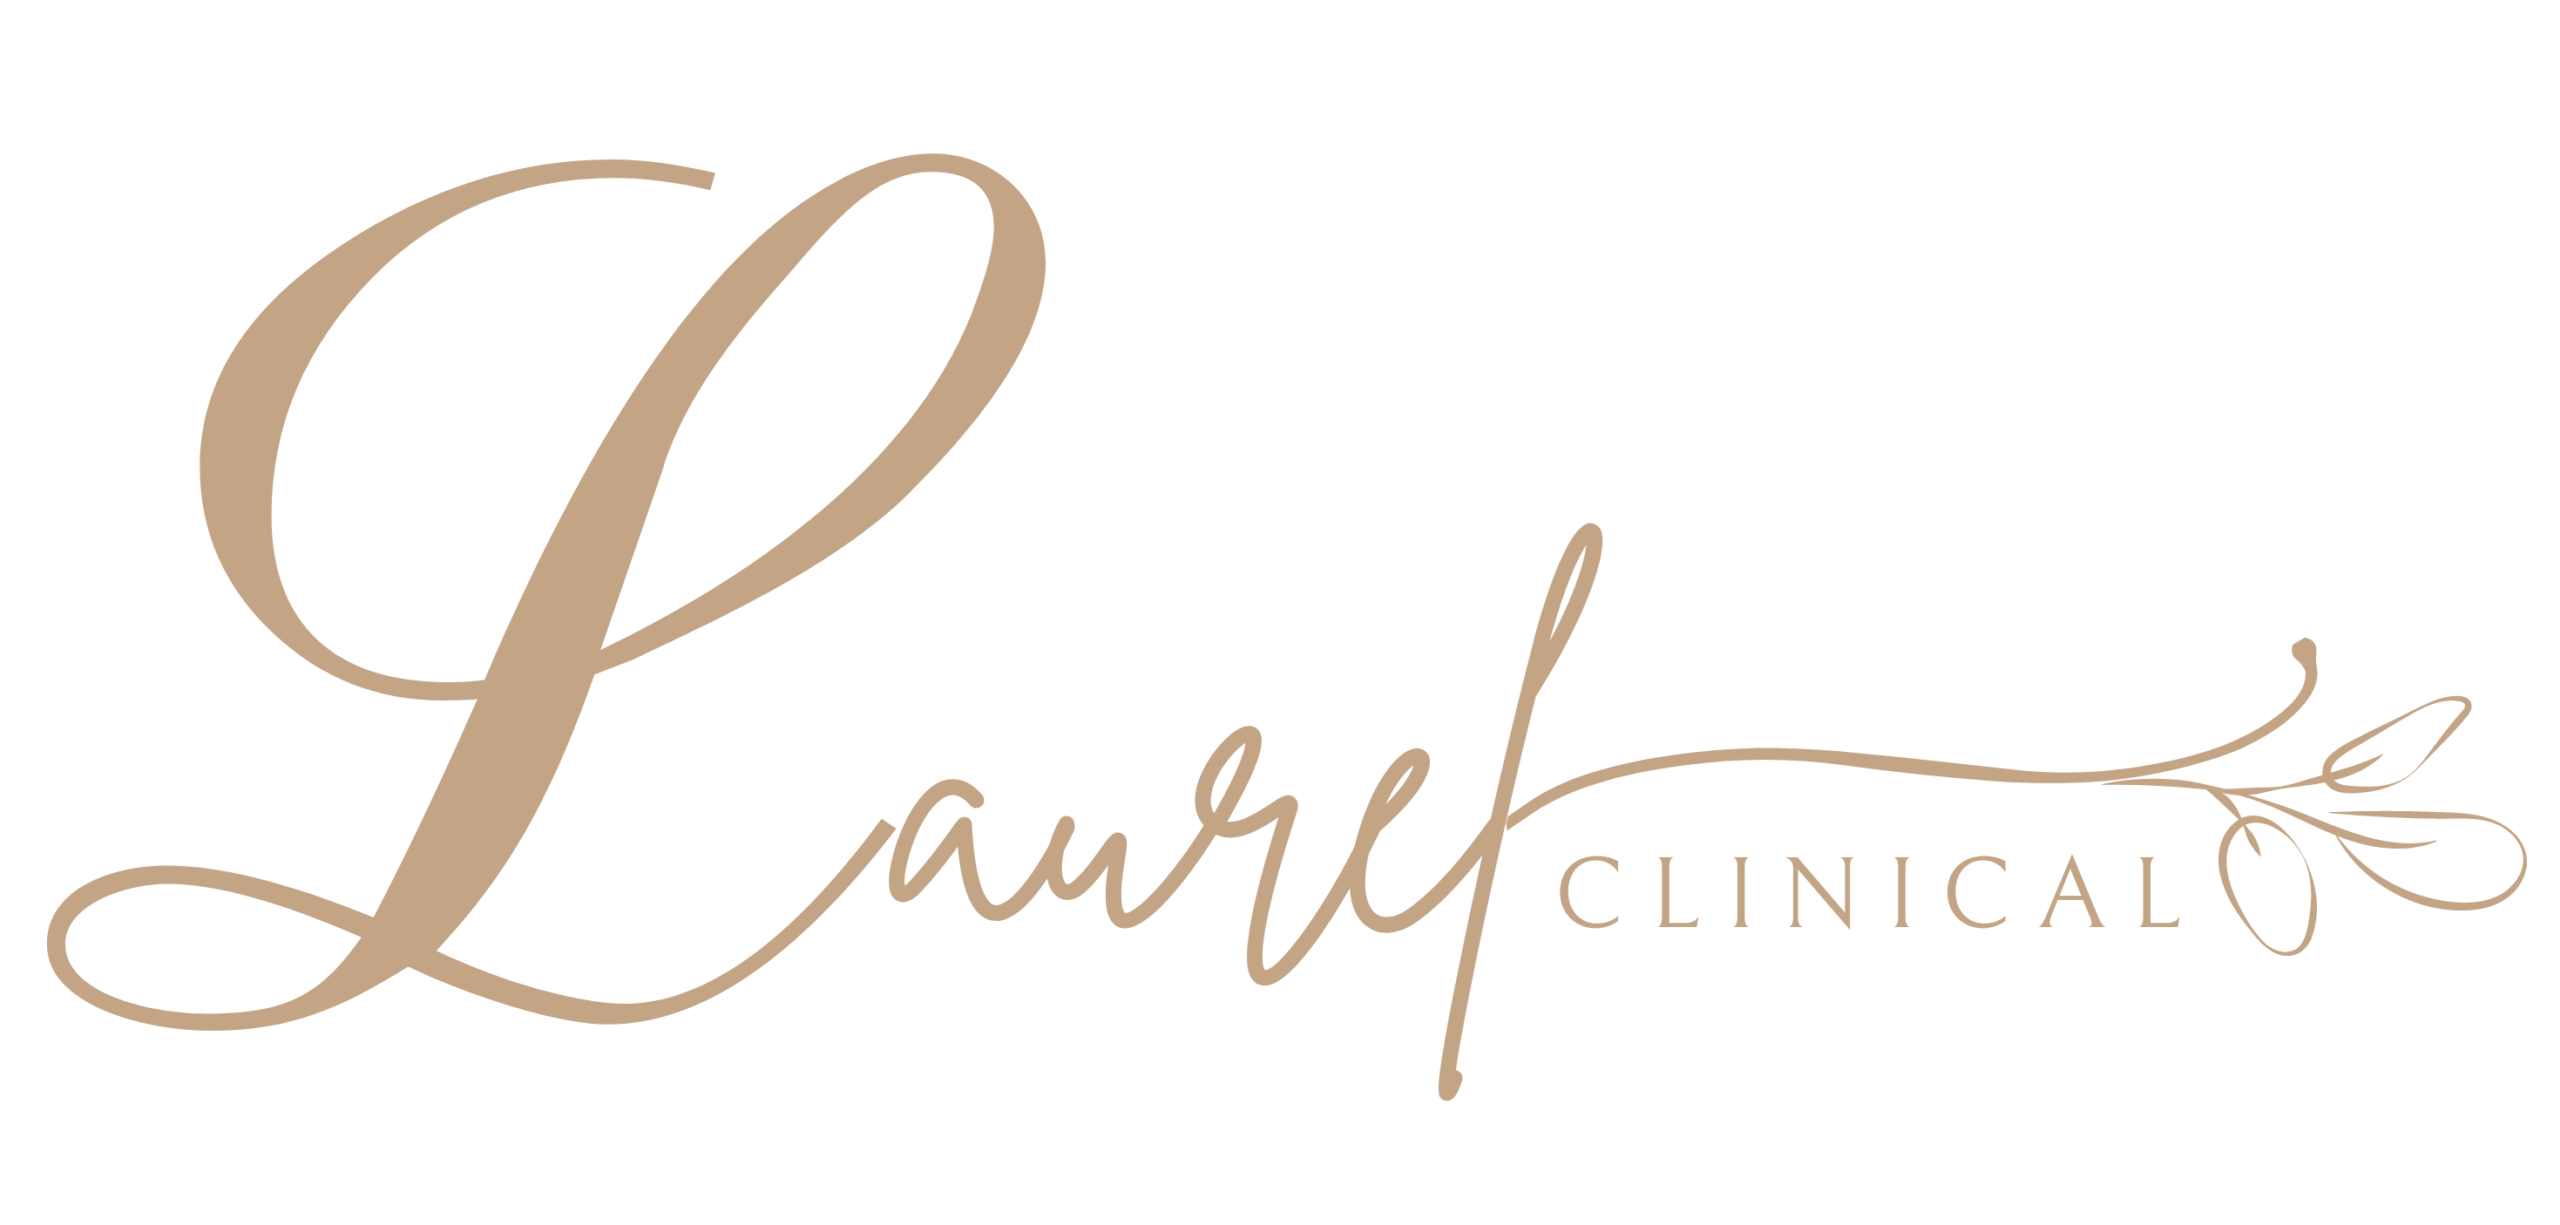 Laurel Clinical Logo